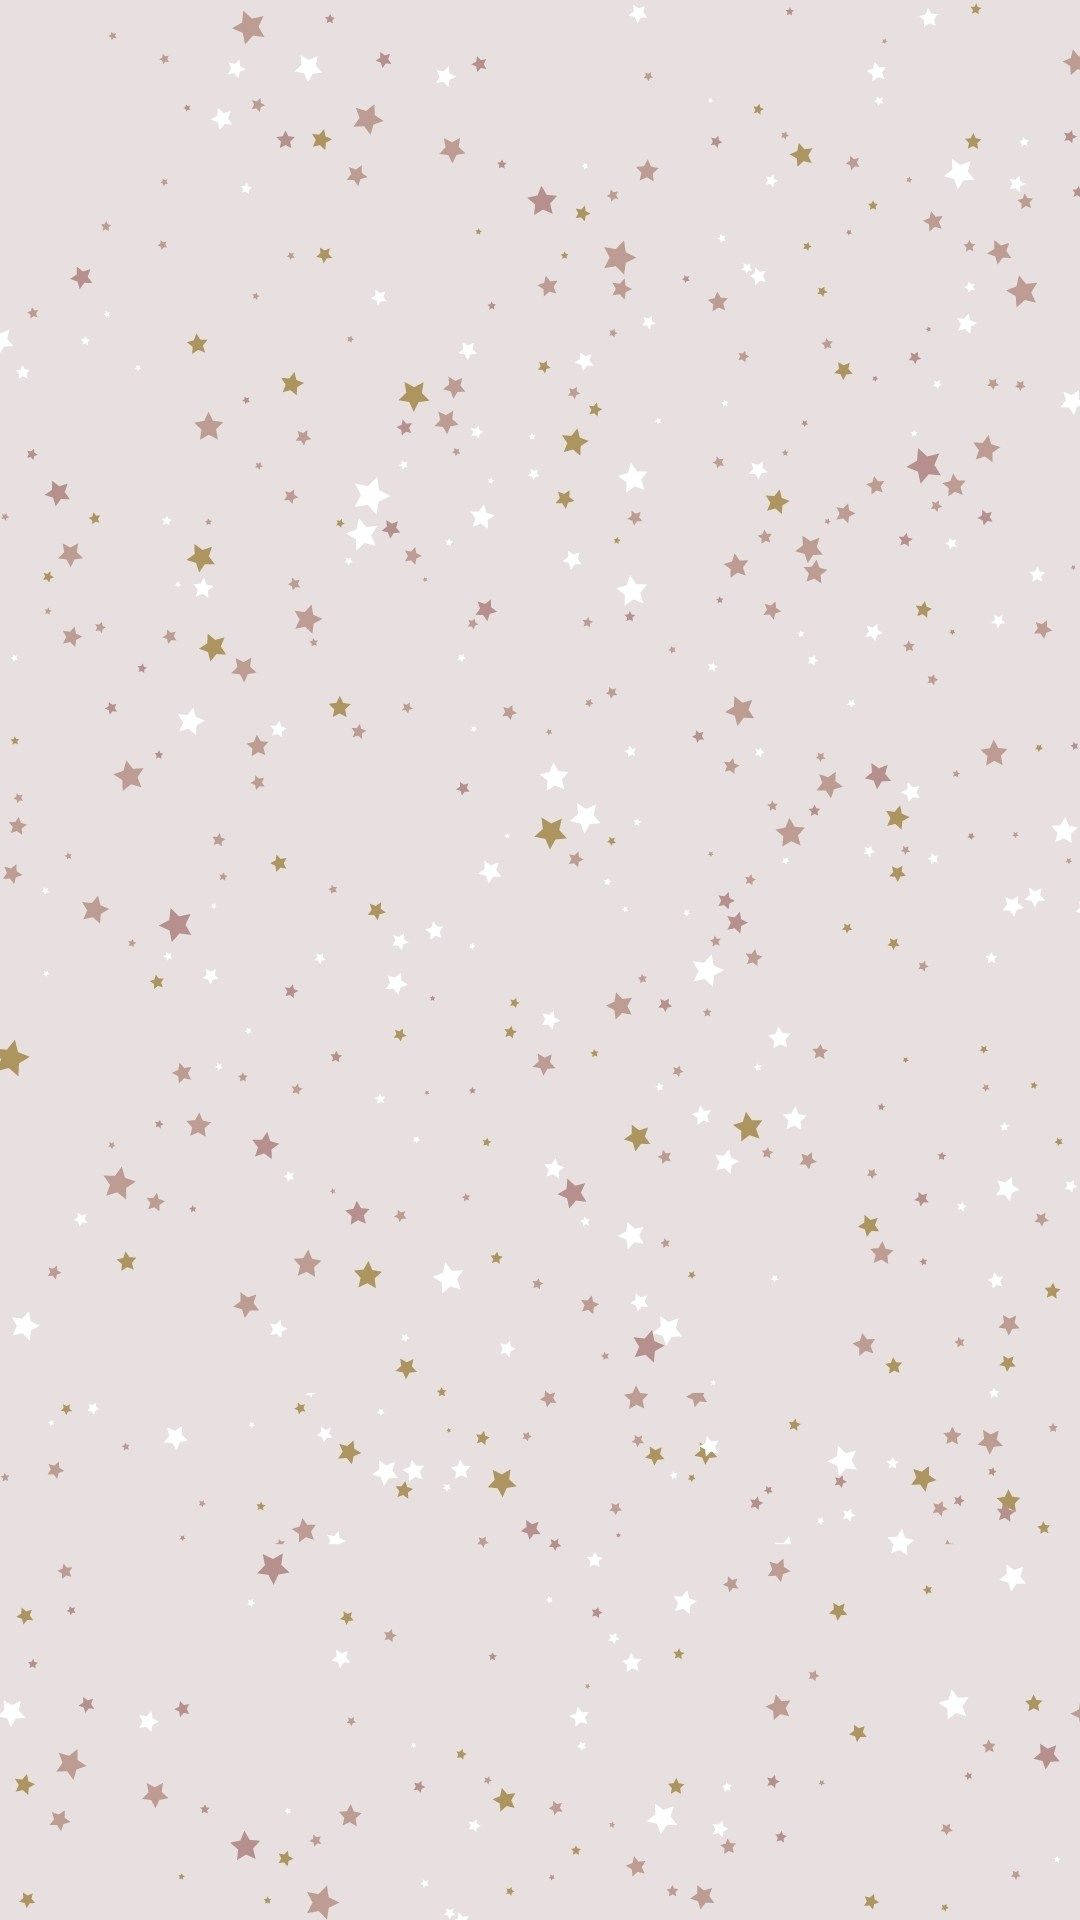 Soothing display of boho-inspired star patterns Wallpaper